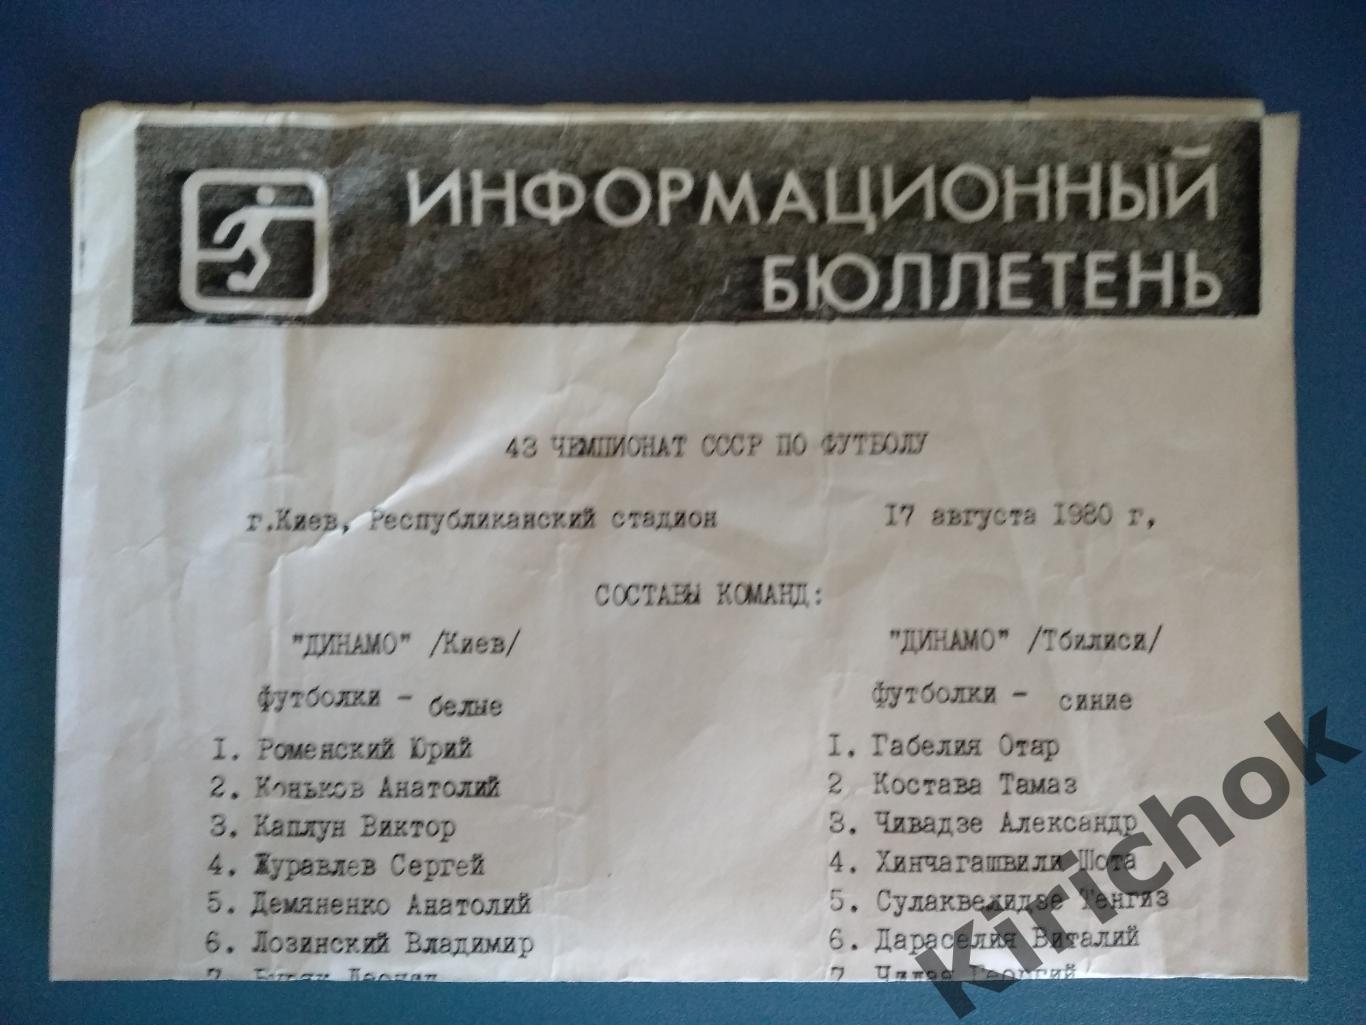 ОРИГИНАЛ МАТЧЕВОГО ПРОТОКОЛА! Динамо Киев - Динамо Тбилиси 1980